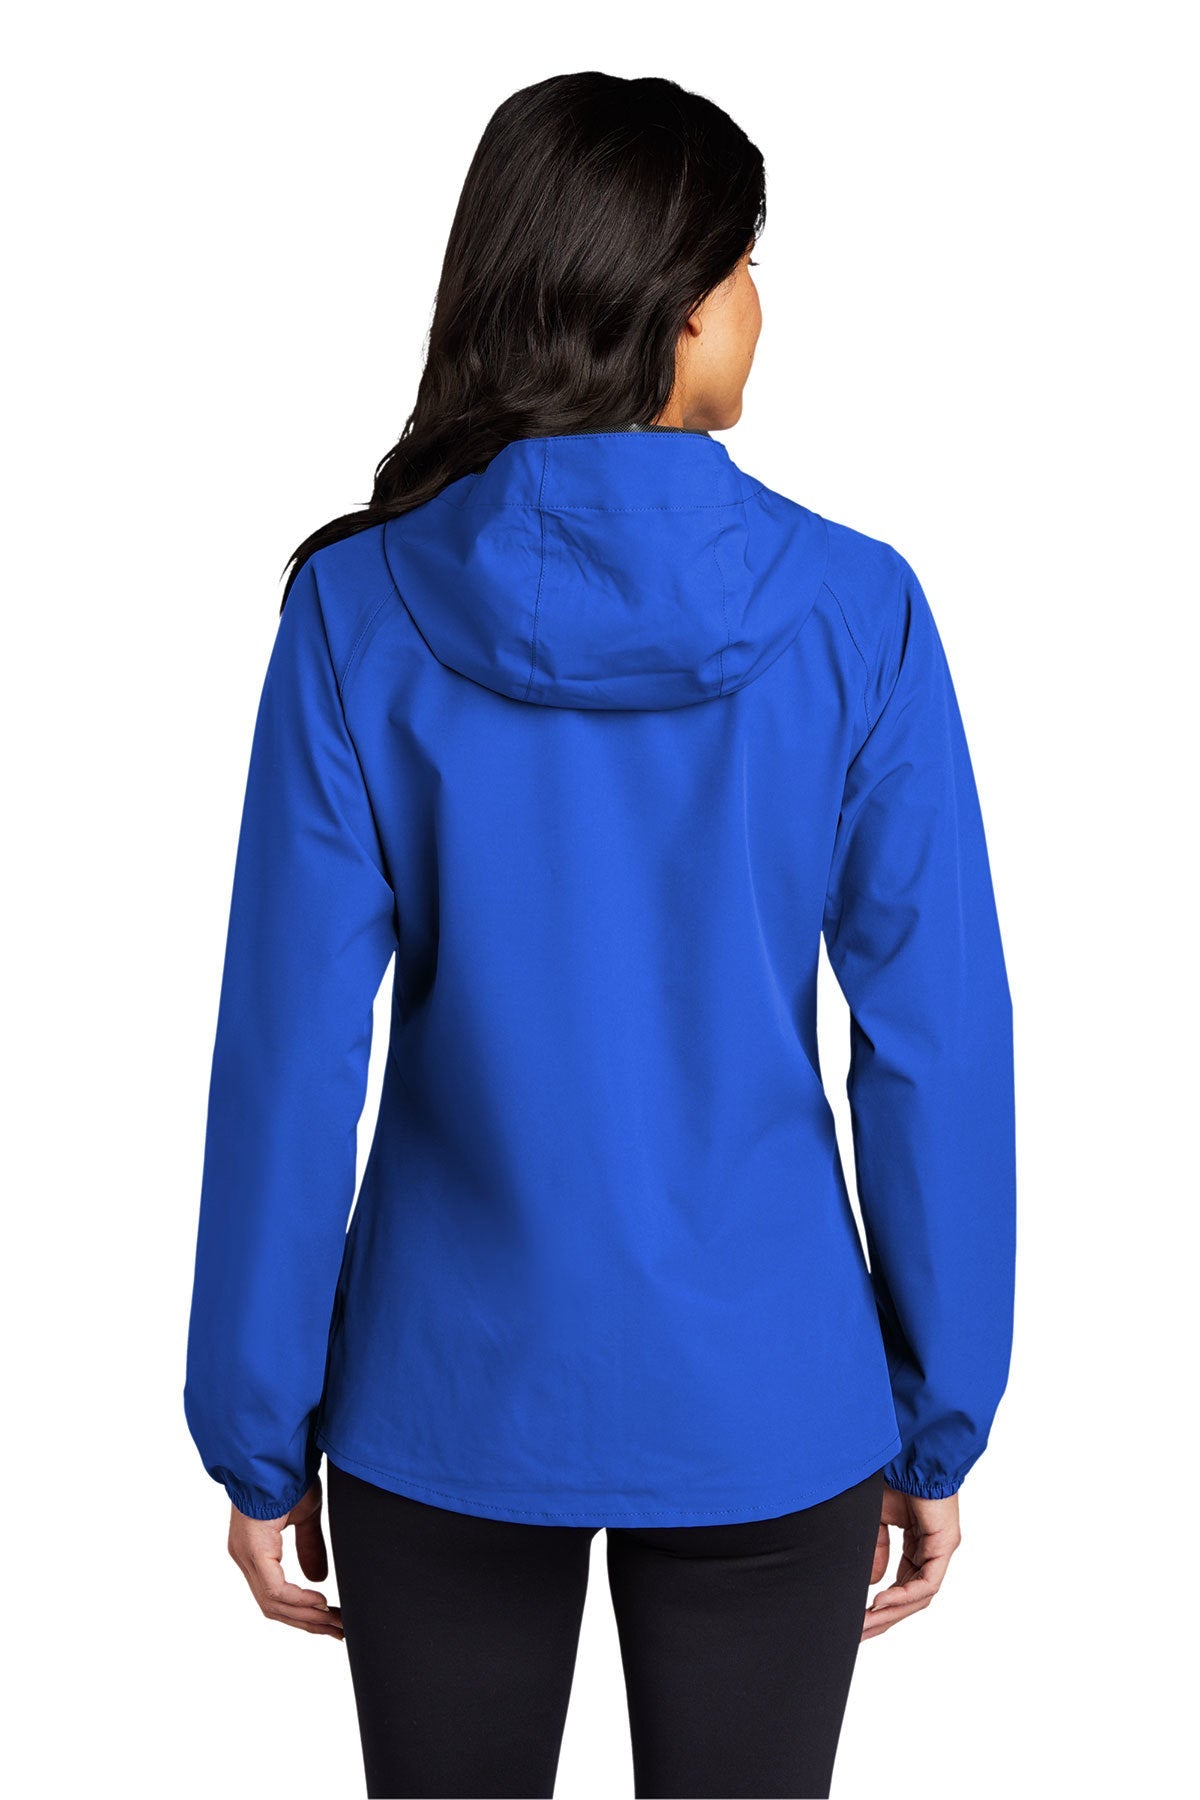 Port Authority Ladies Essential Branded Rain Jackets, True Royal